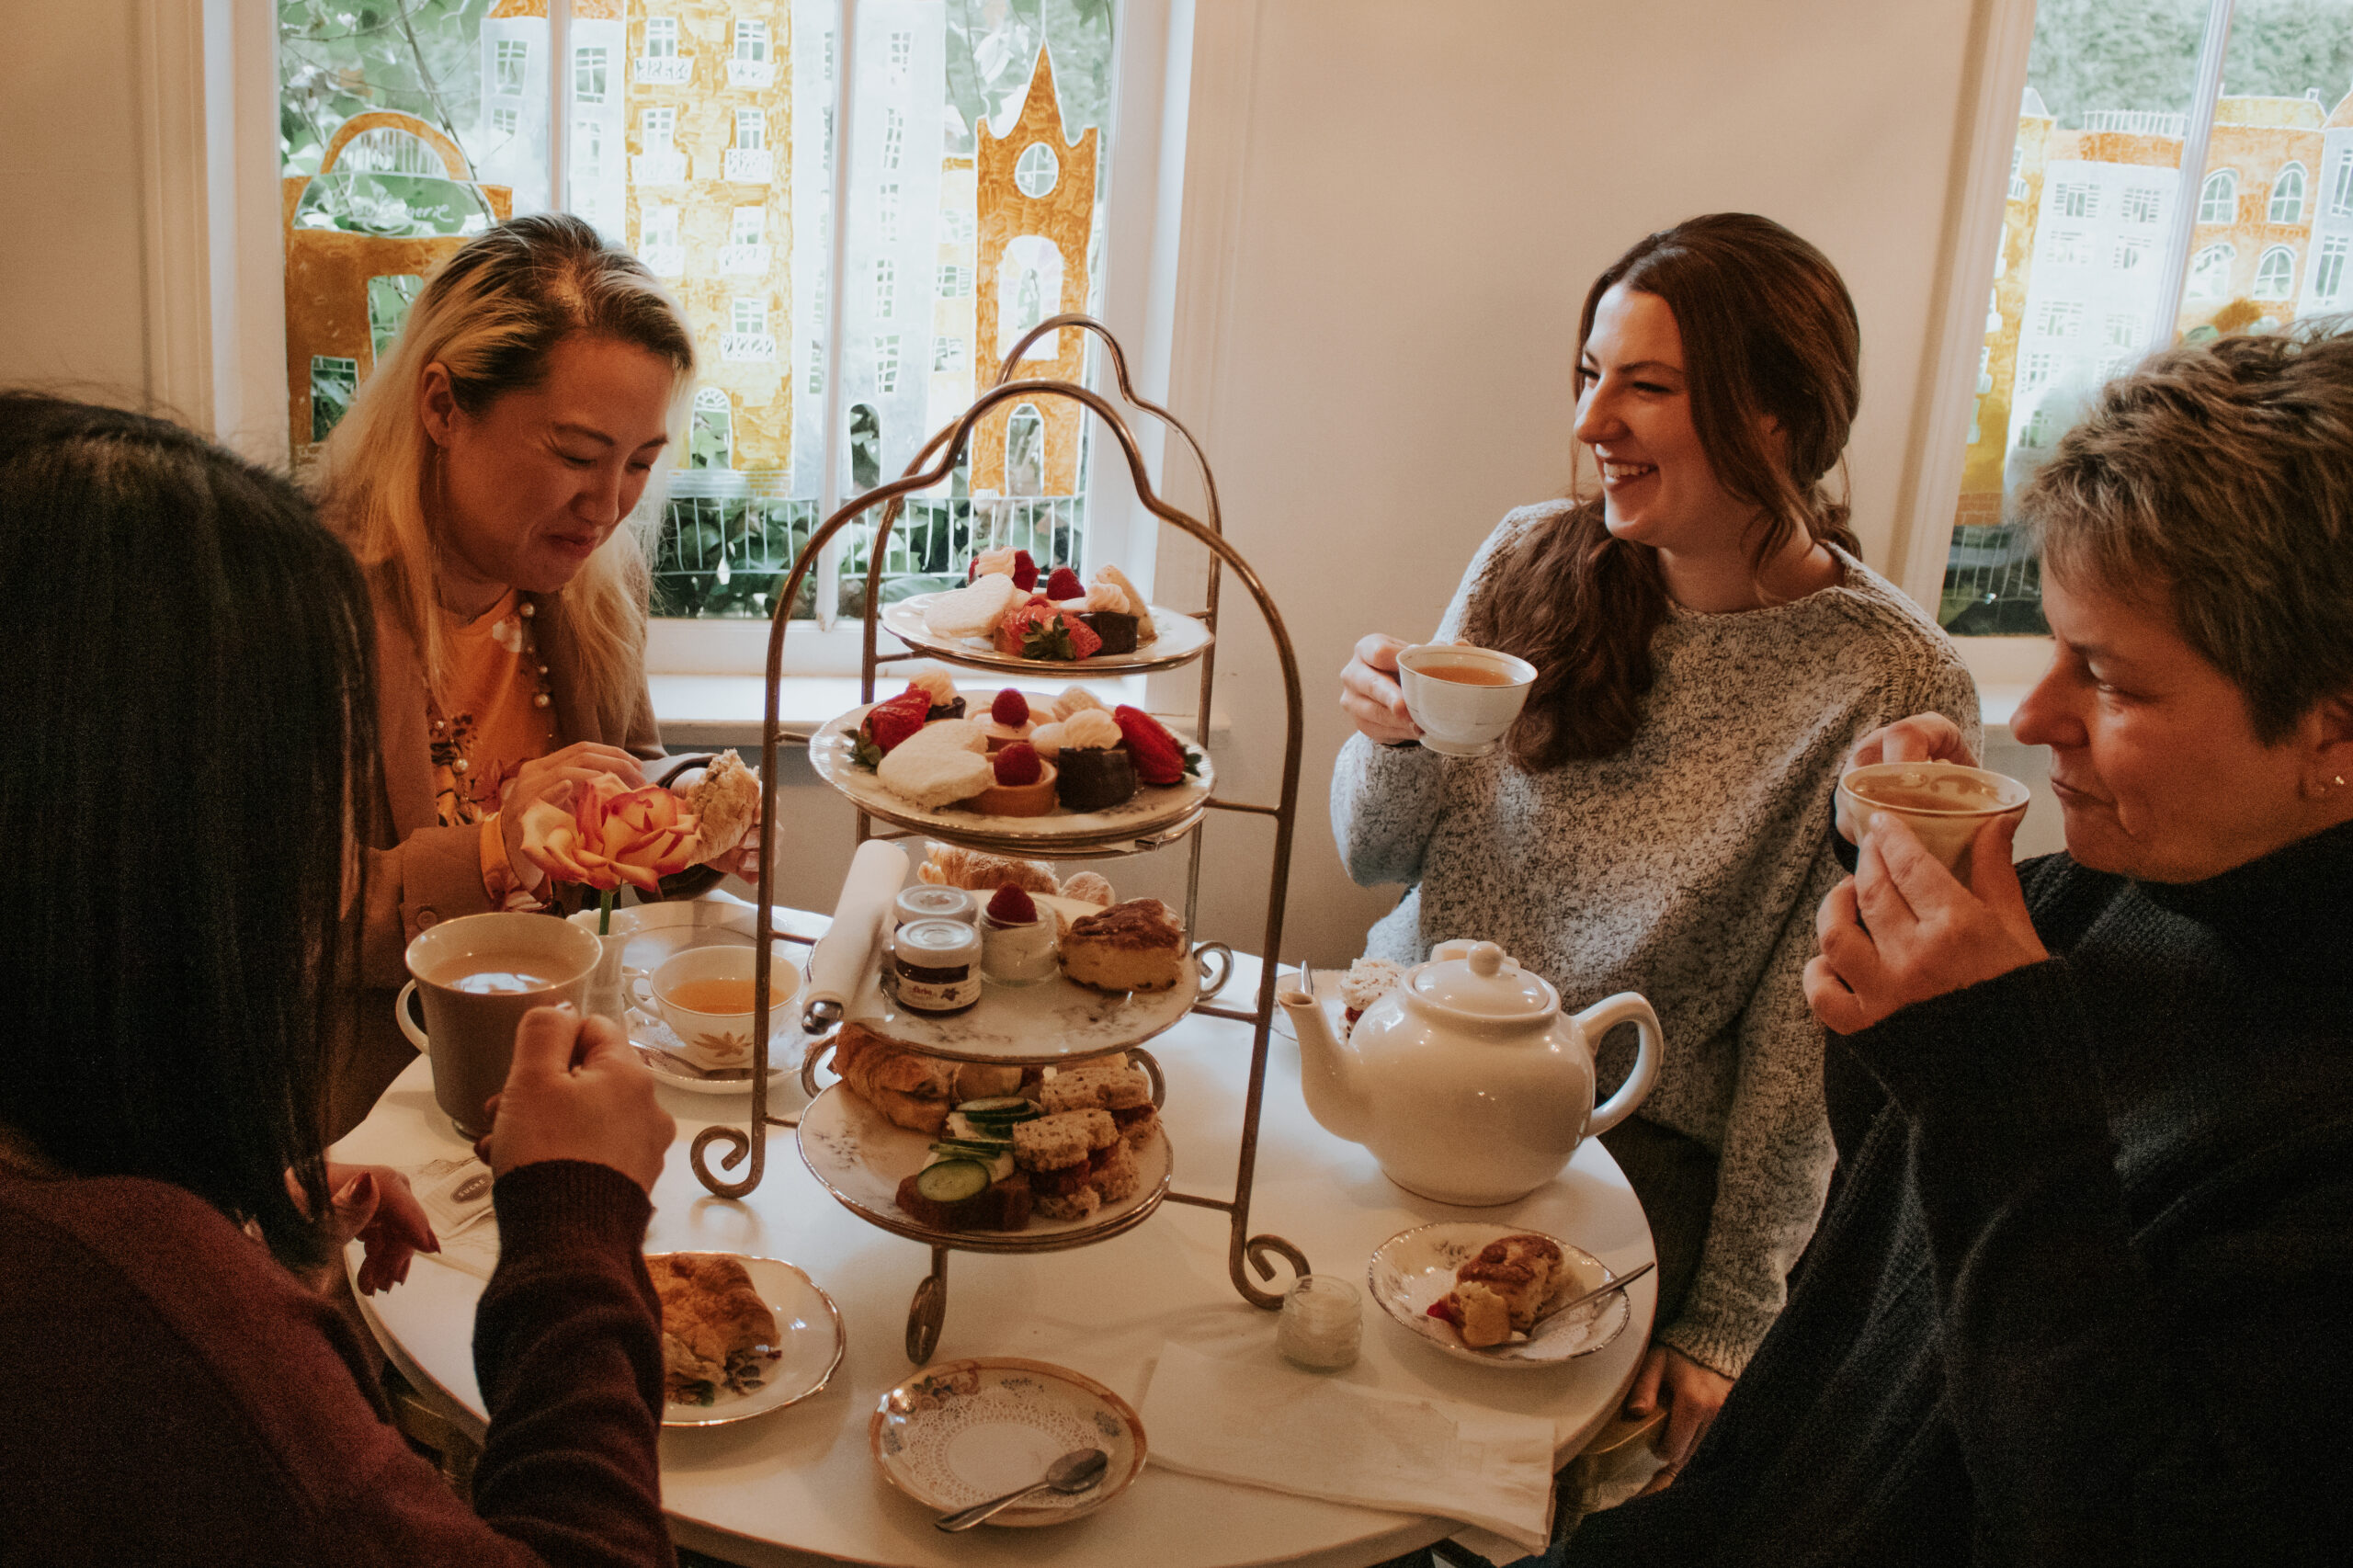 Four women sit together around a table enjoying high tea.